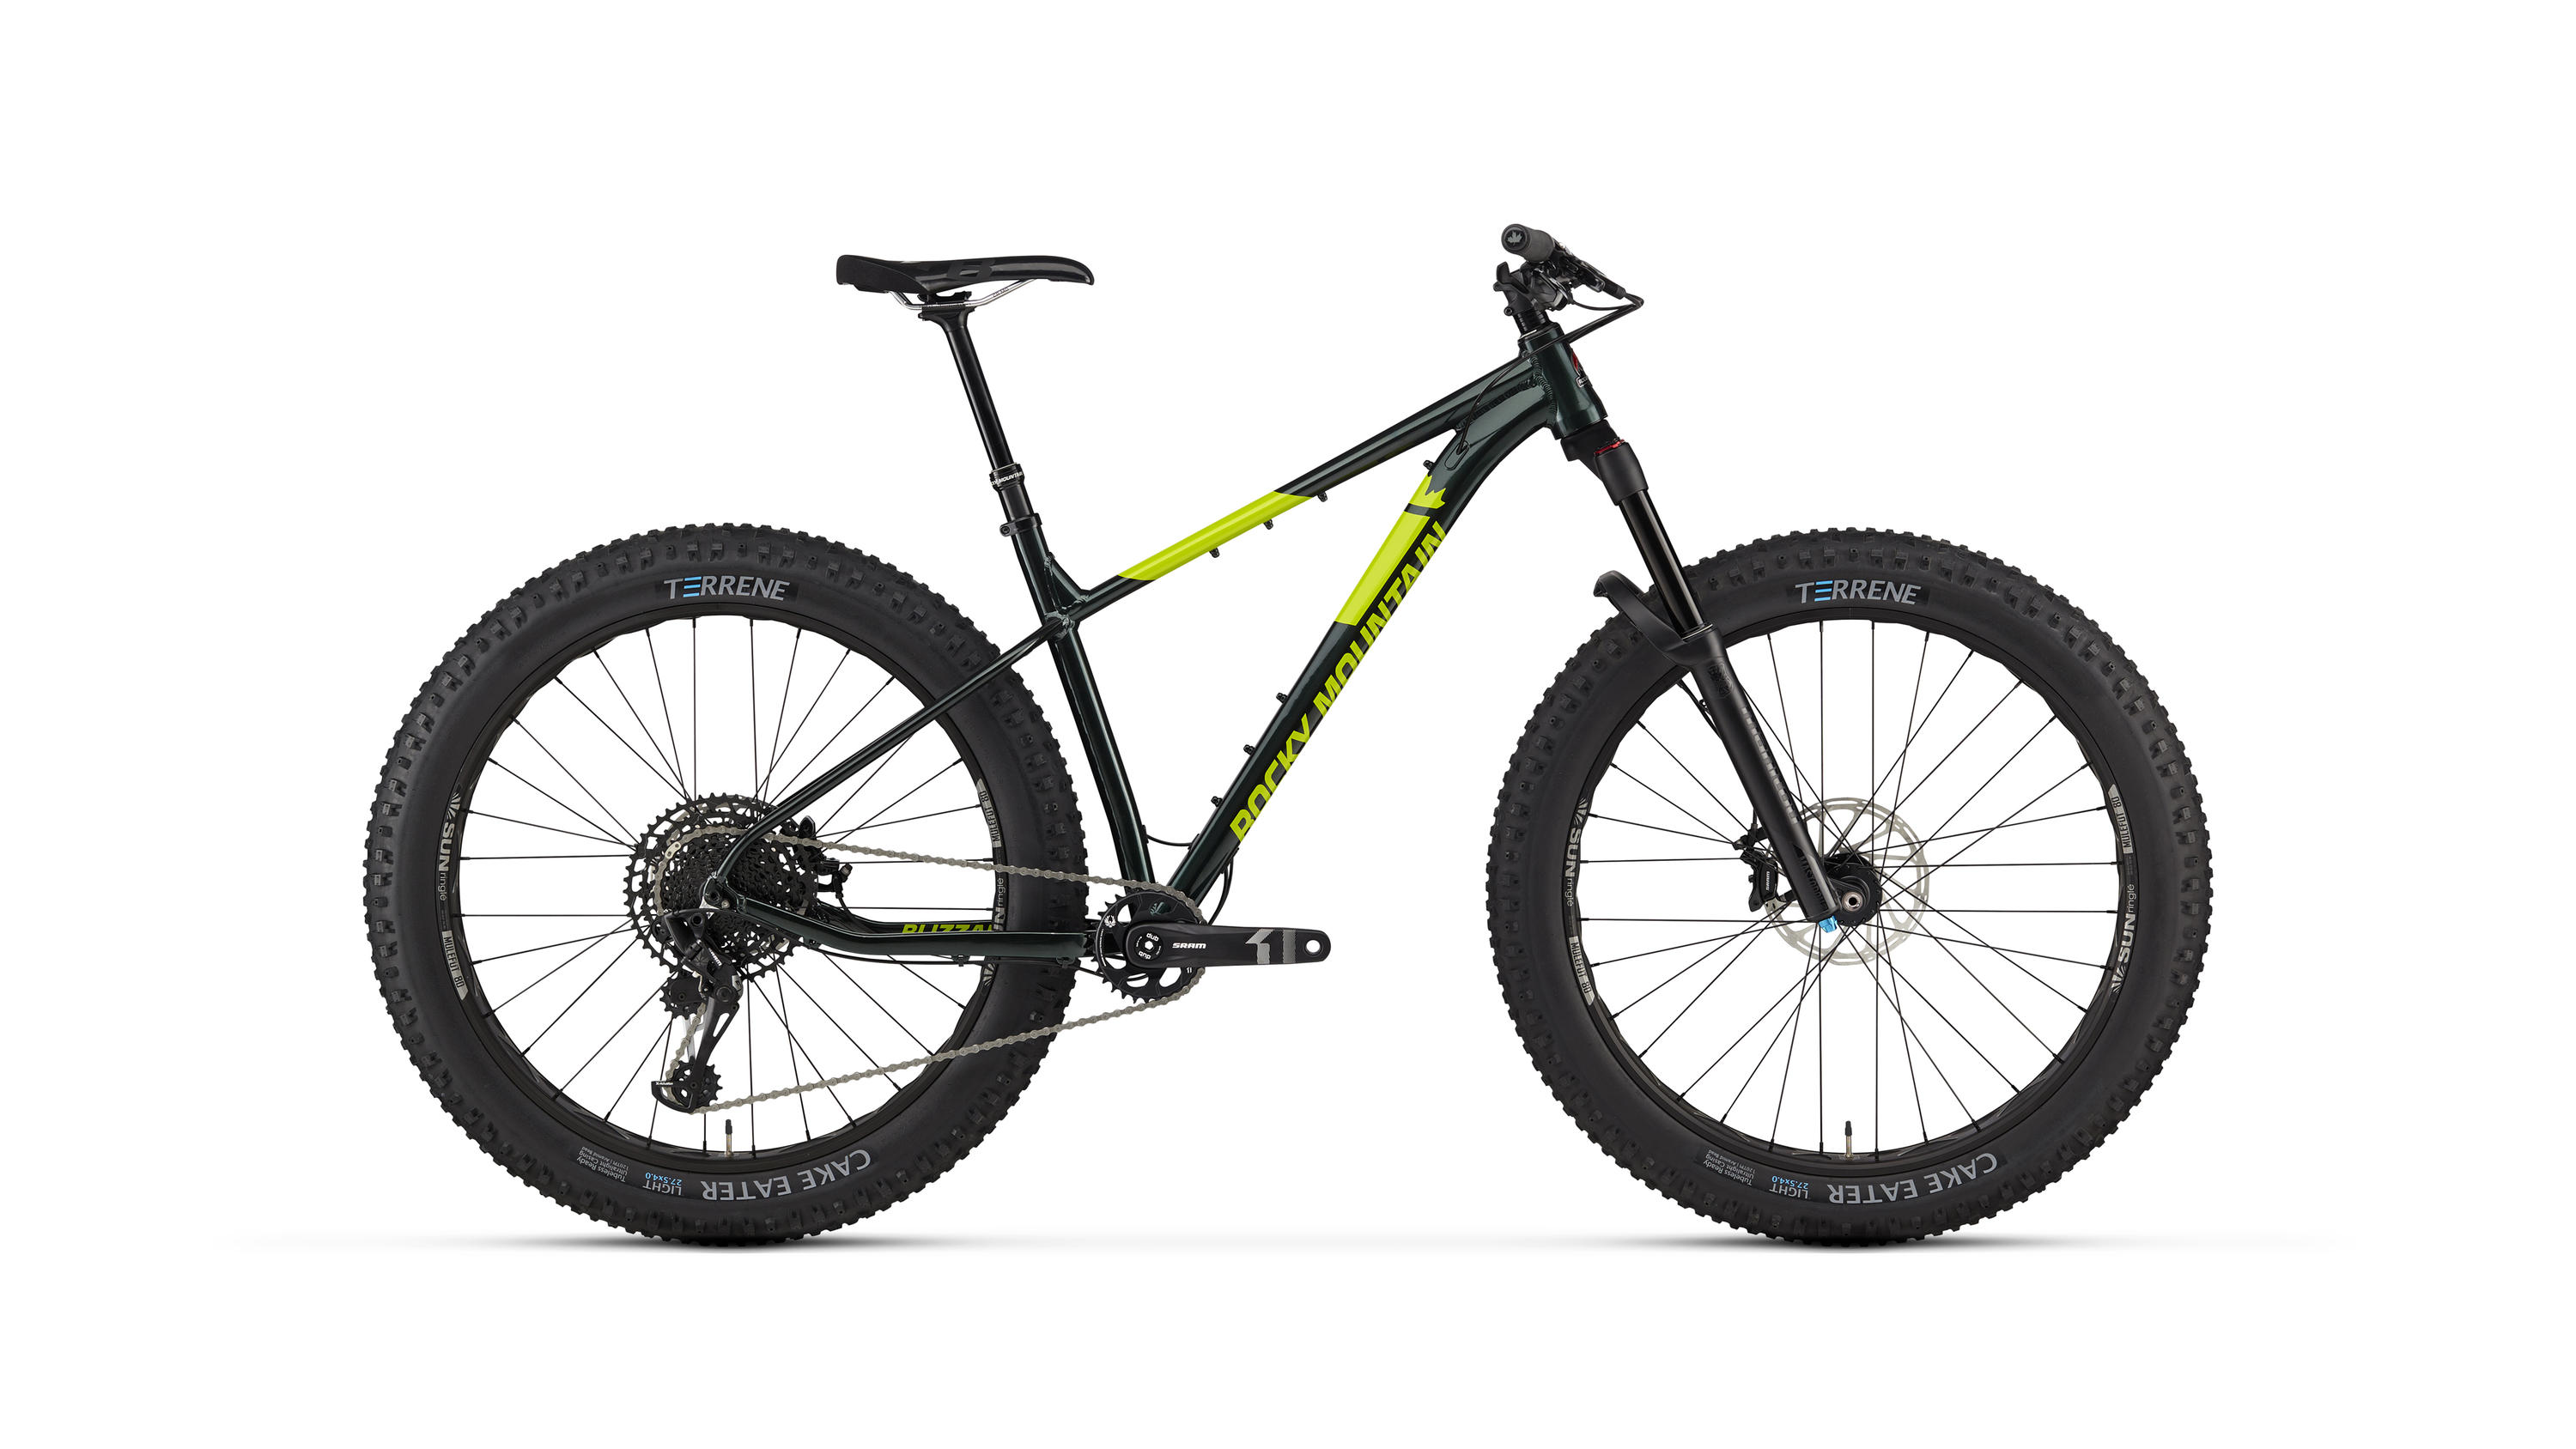 Vélo Rocky mountain - Blizzard 50 (27.5) - 2020 fat bike